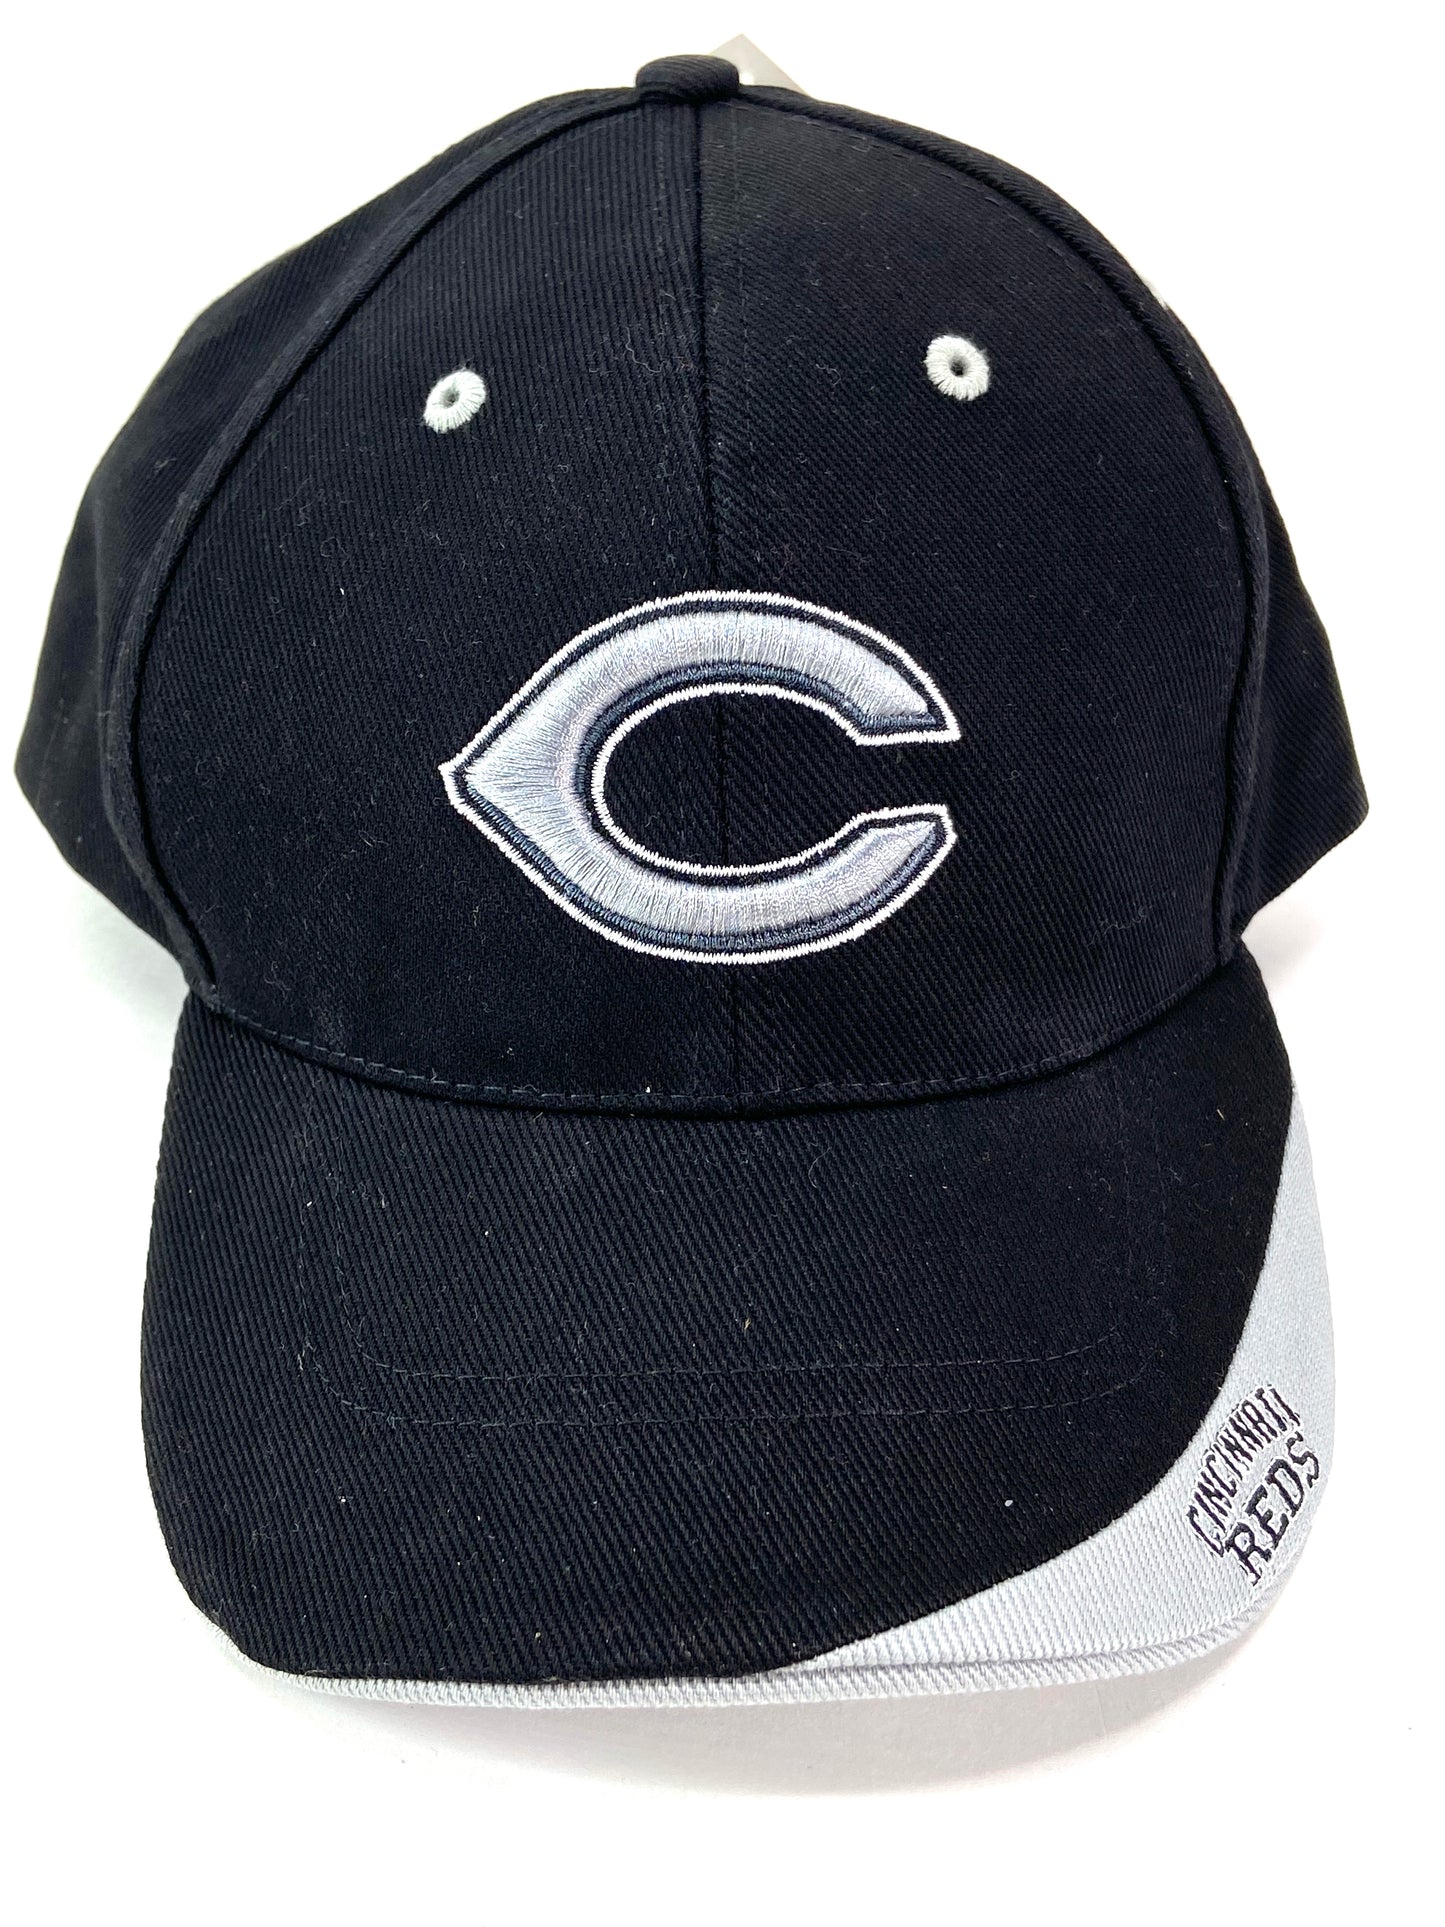 Cincinnati Reds Vintage MLB Black Cap w/Silver "C" Cap by Twins Enterprise